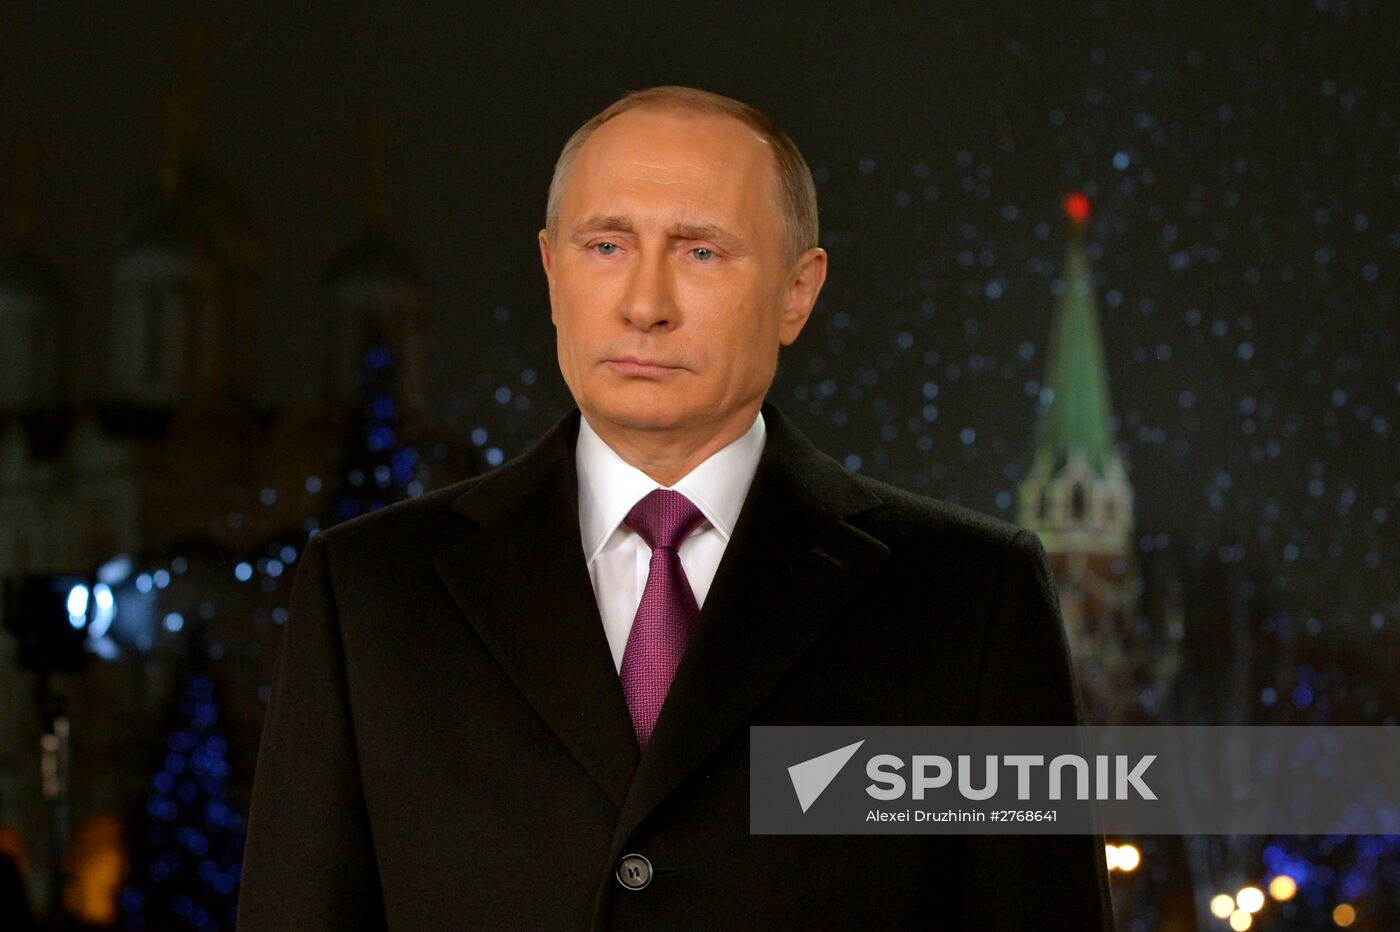 Russian President Vladimir Putin's New Year address to the nation